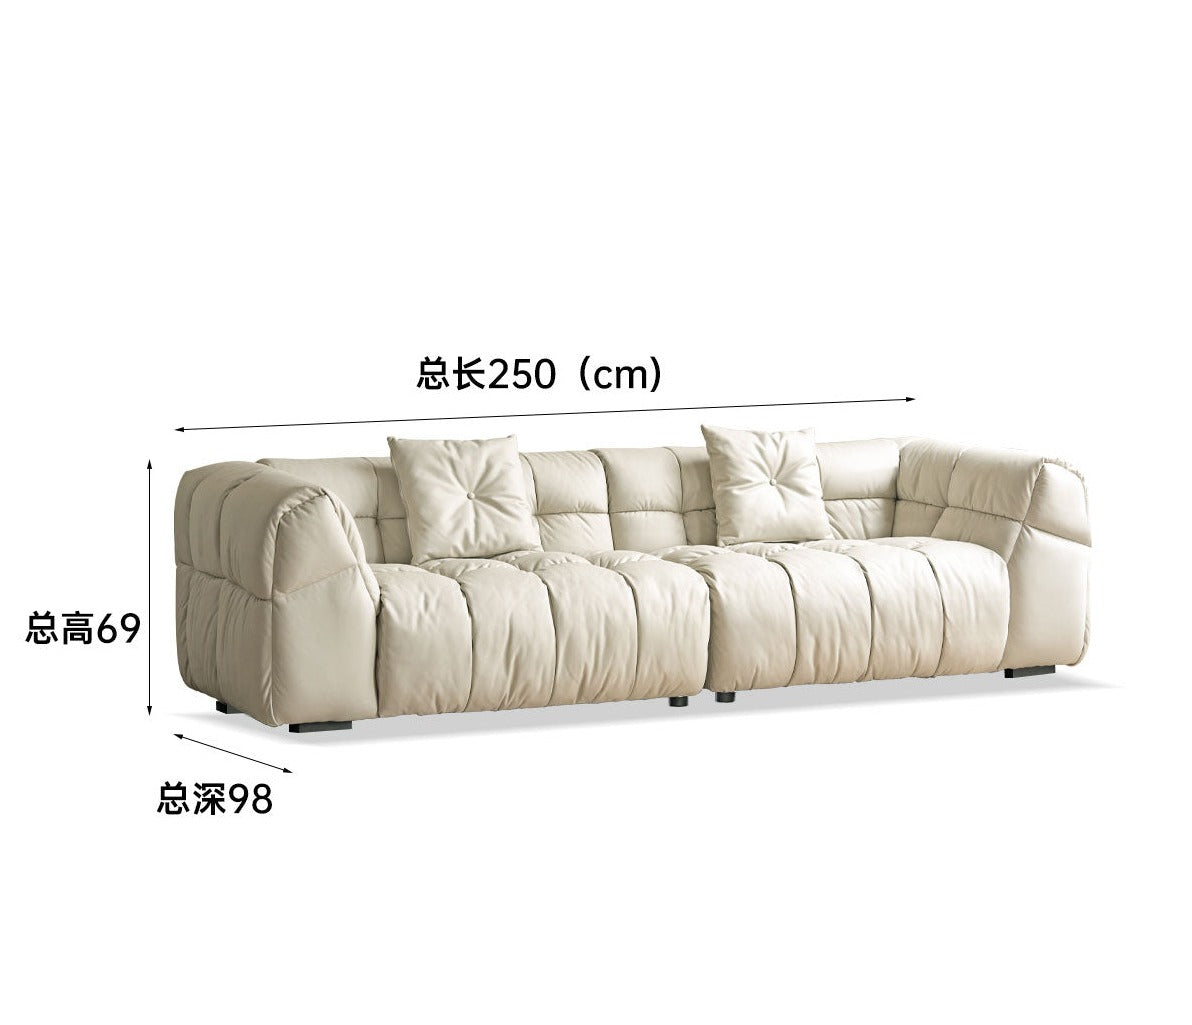 Genuine Leather,Technology cloth sofa cream wind)